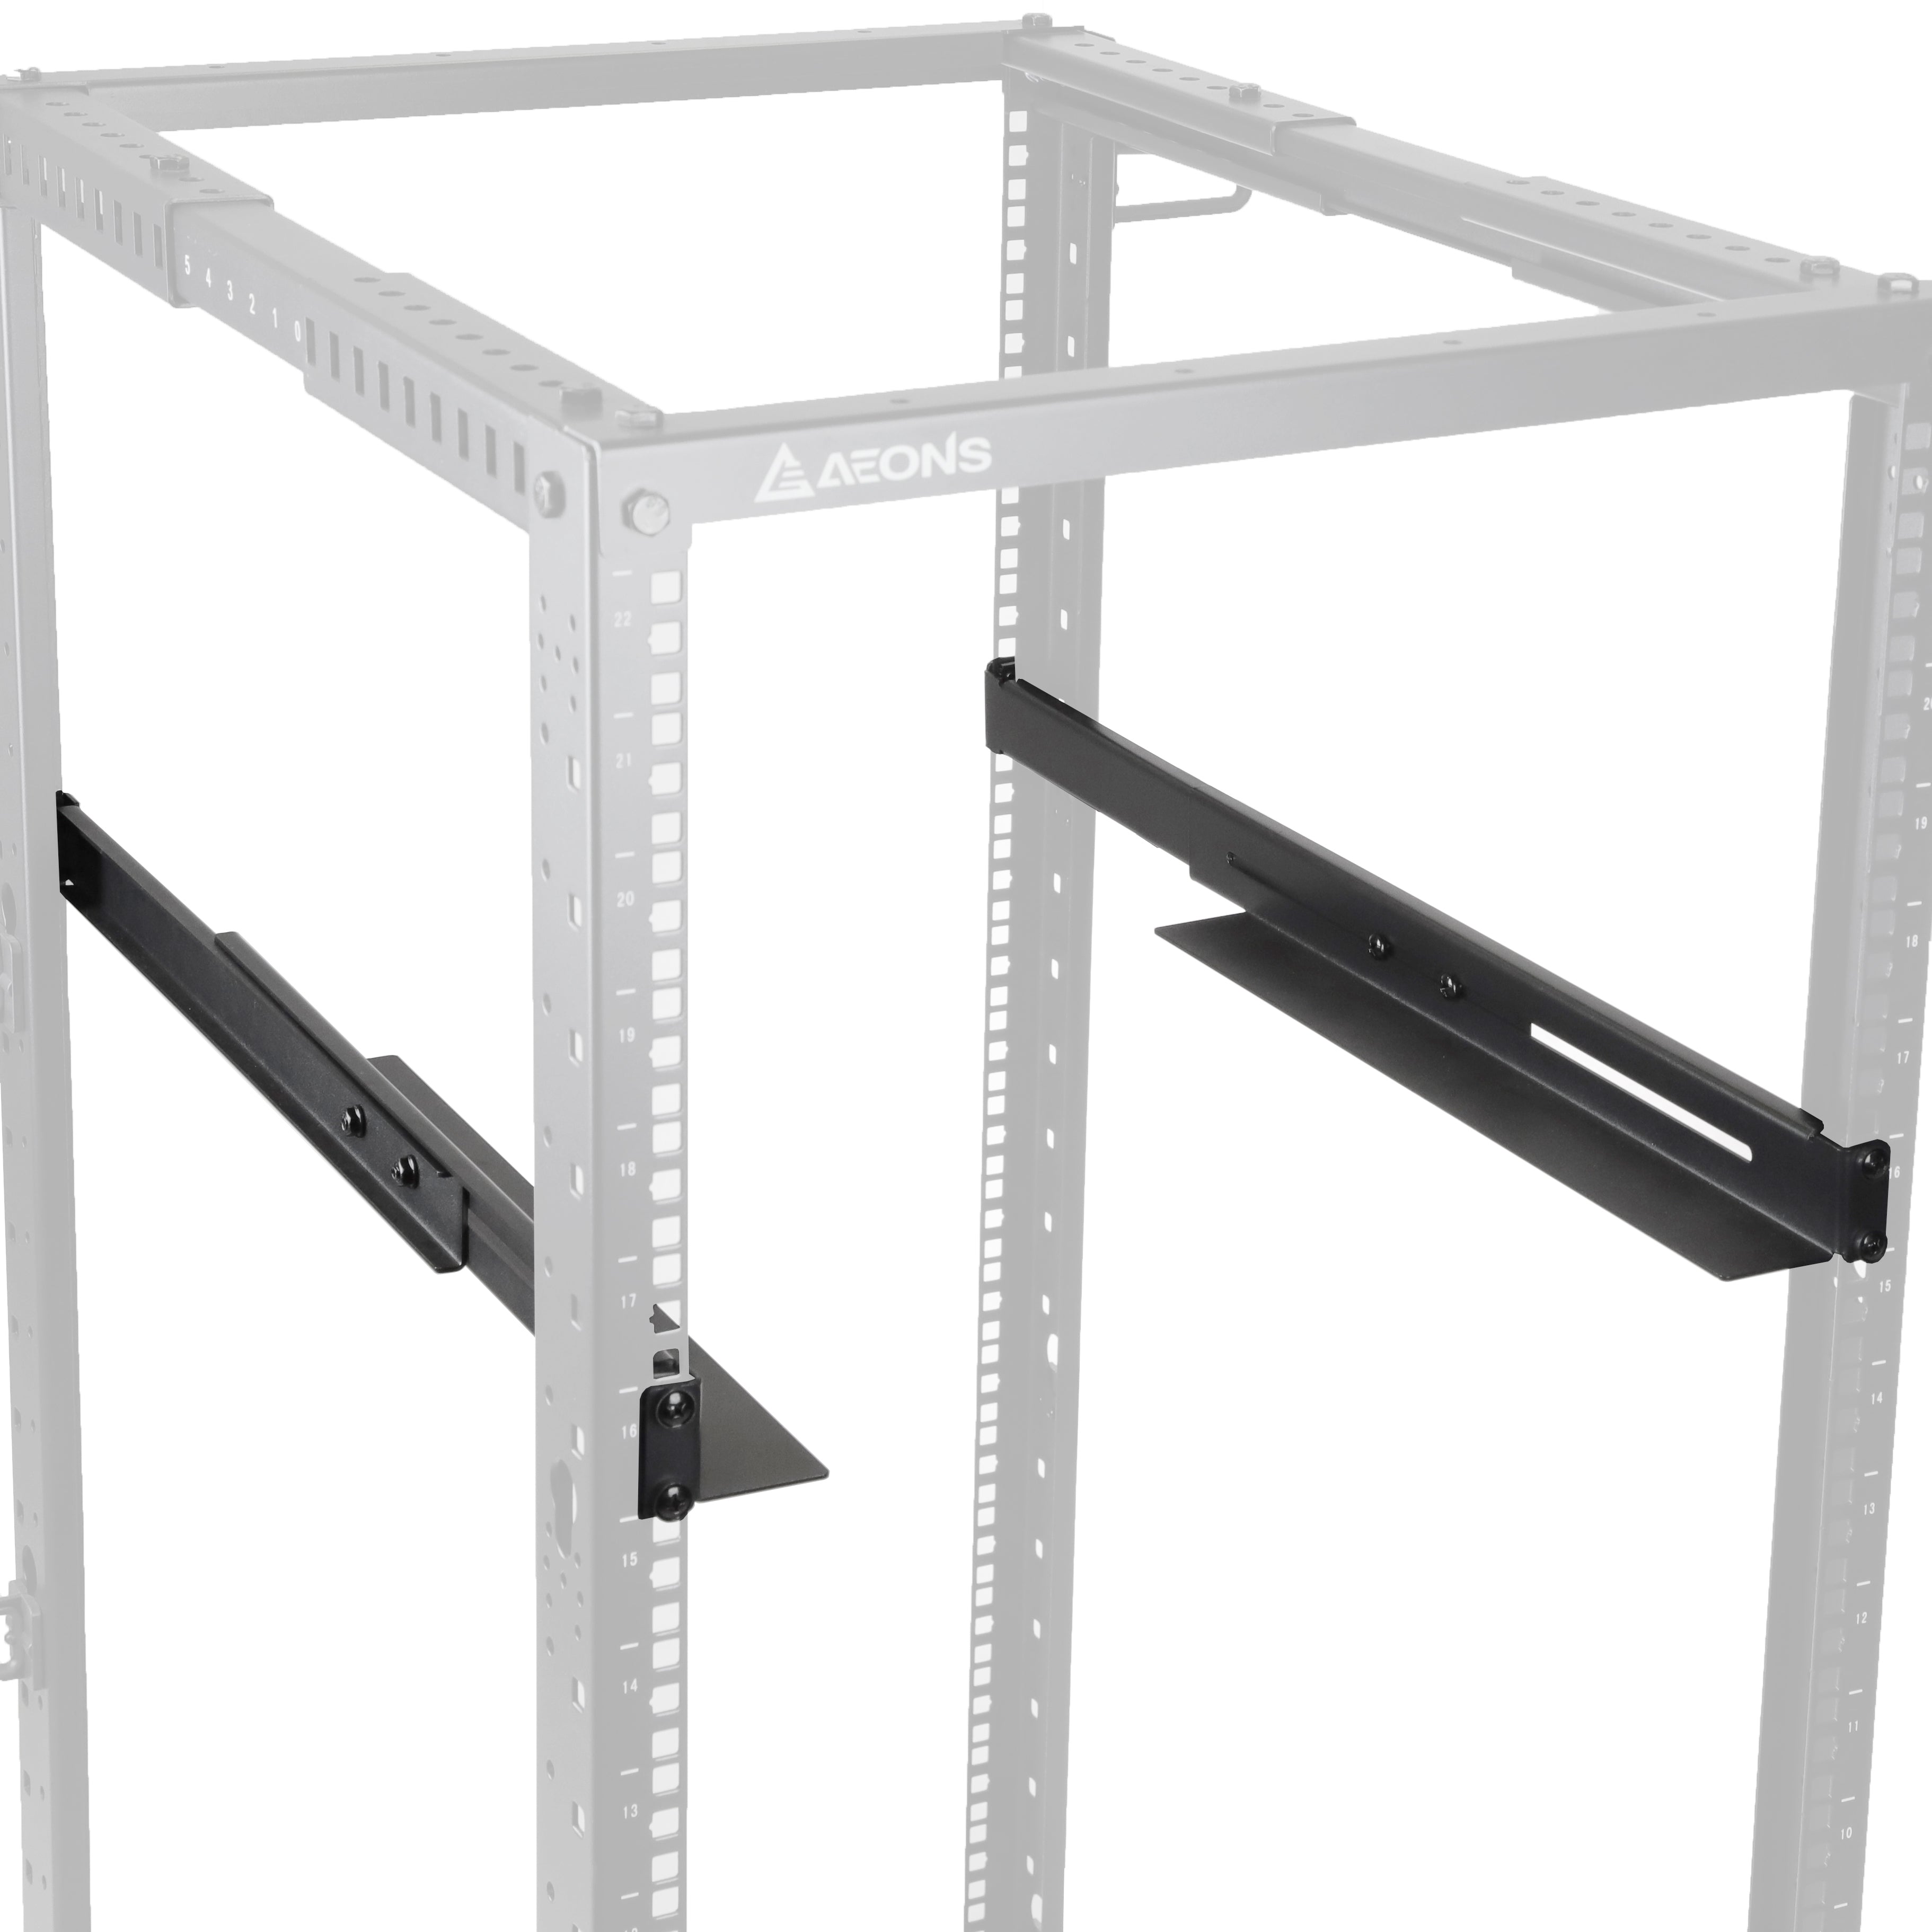 Aeons Universal 1U Adjustable Rack Mount Server Shelf Rails, up to 33.5-inch Depth